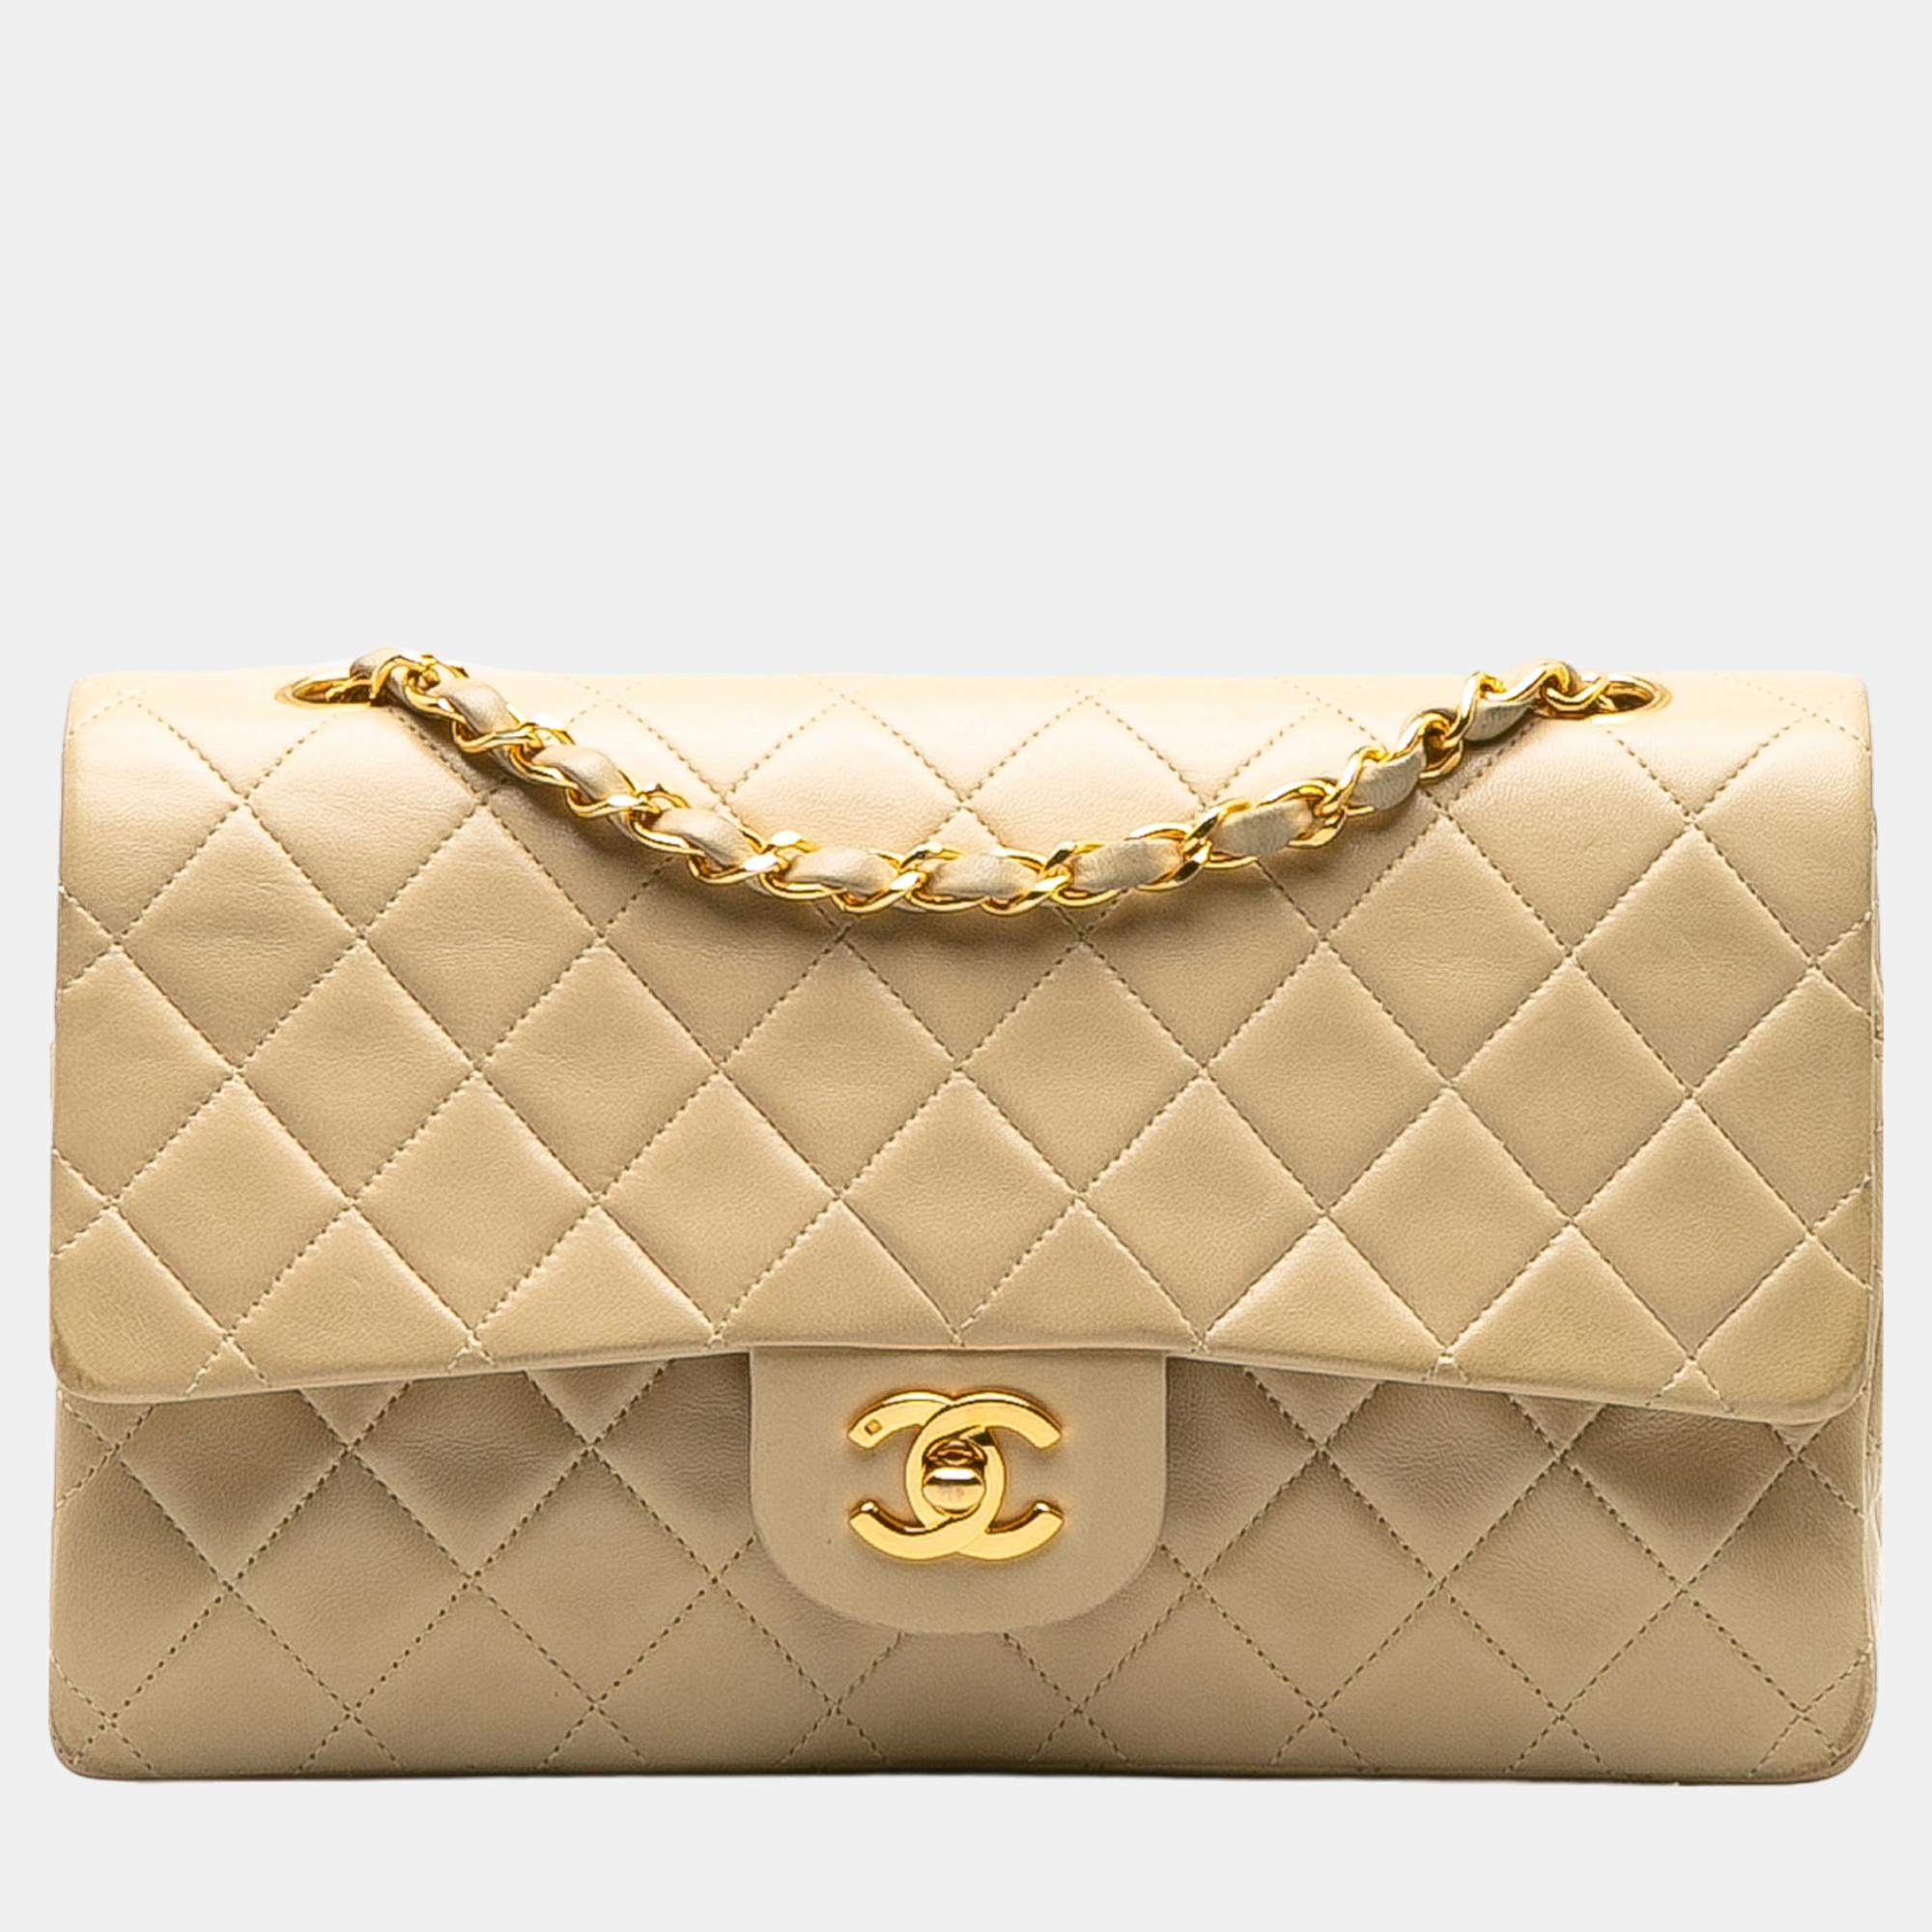 Chanel beige medium classic lambskin double flap